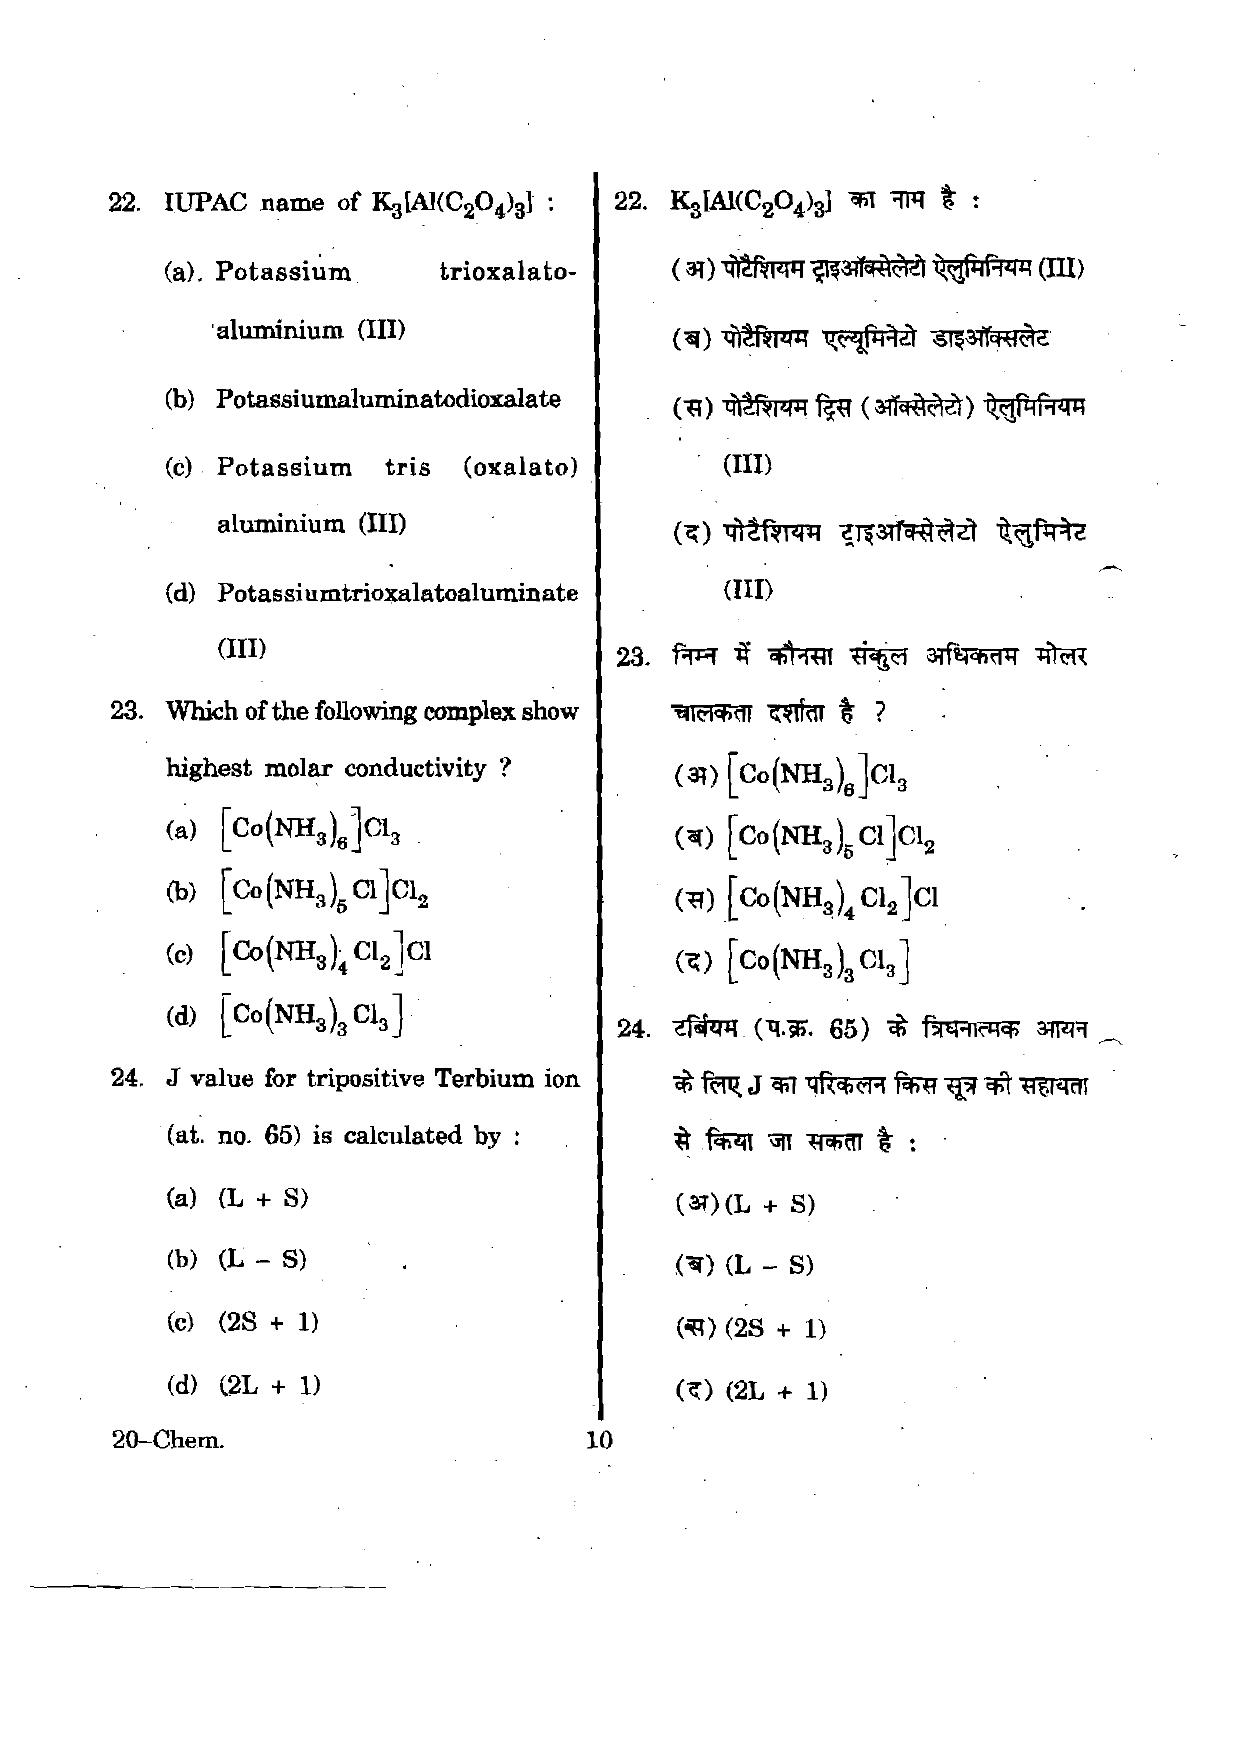 URATPG Chemistry 2012 Question Paper - Page 10